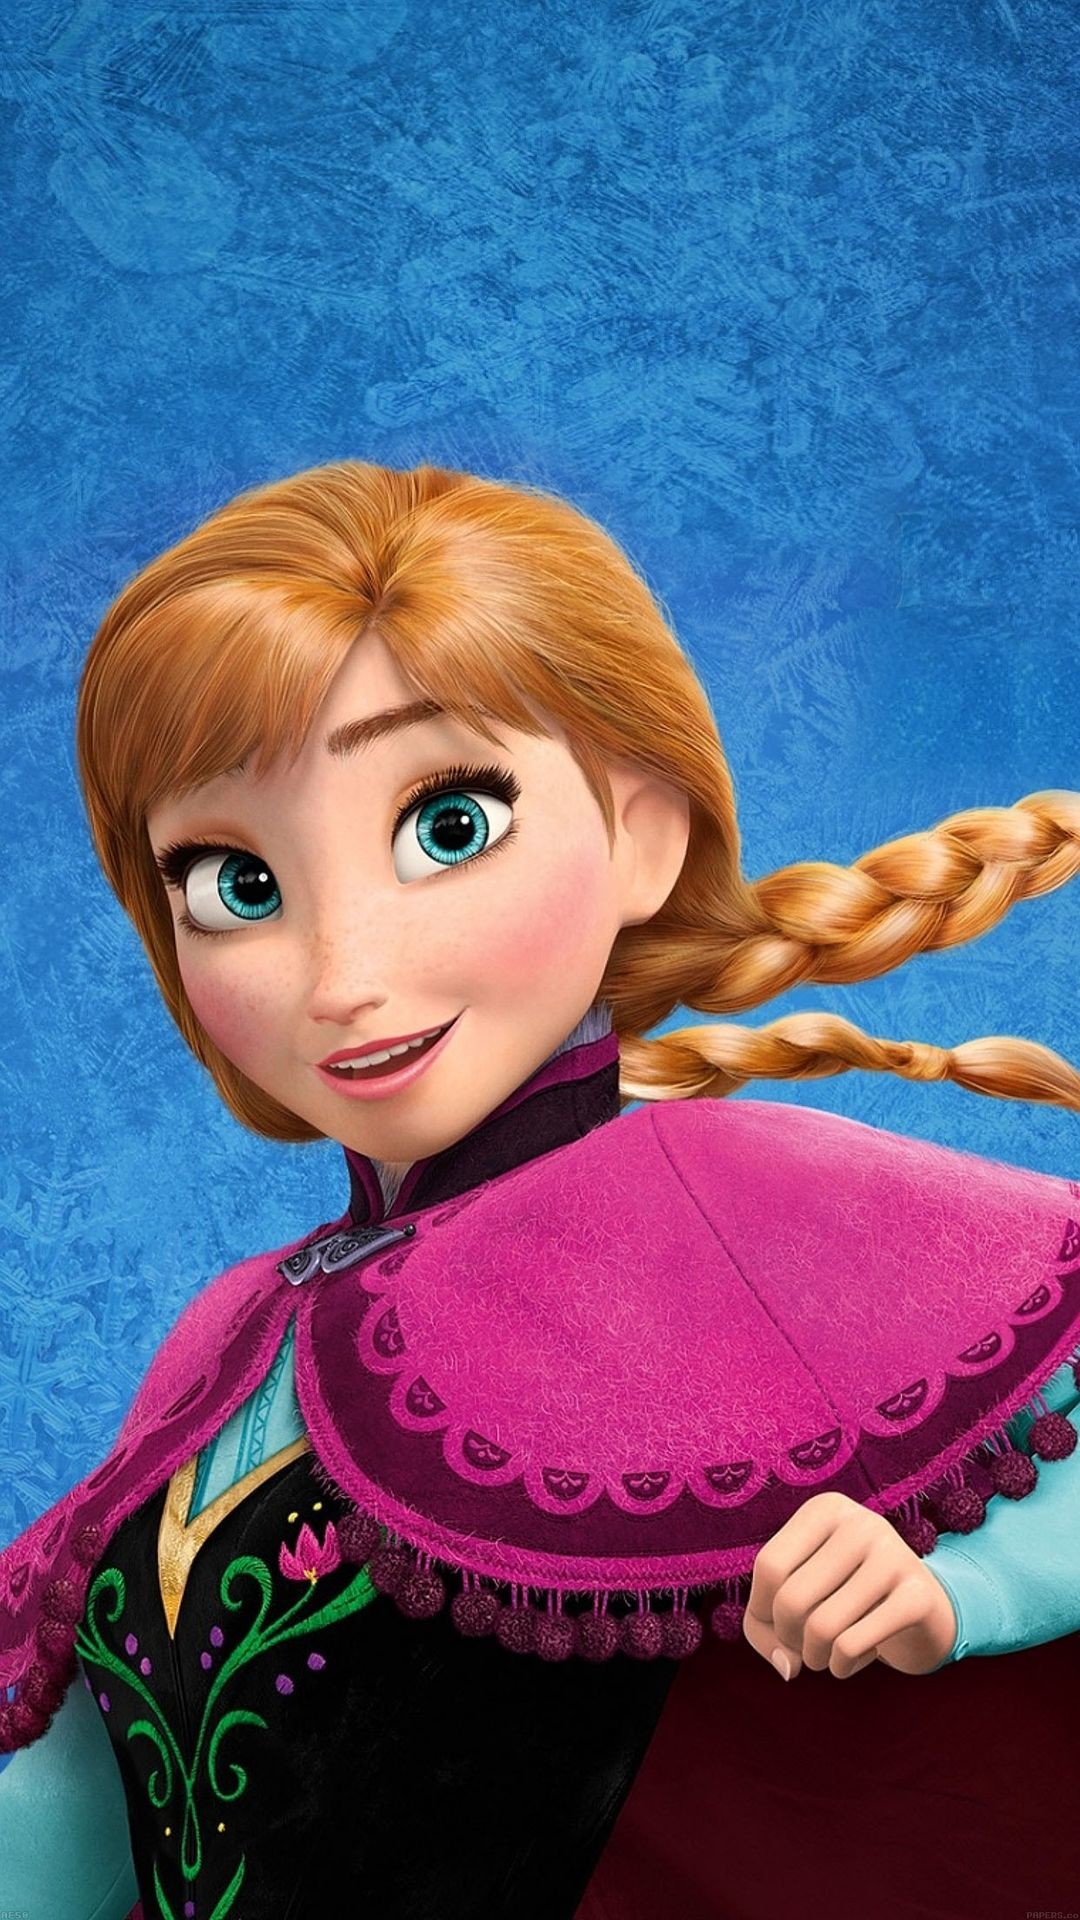 1080x1920 Tap image for more iPhone Disney wallpaper! Frozen Disney Princess Anna of  arendelle - @